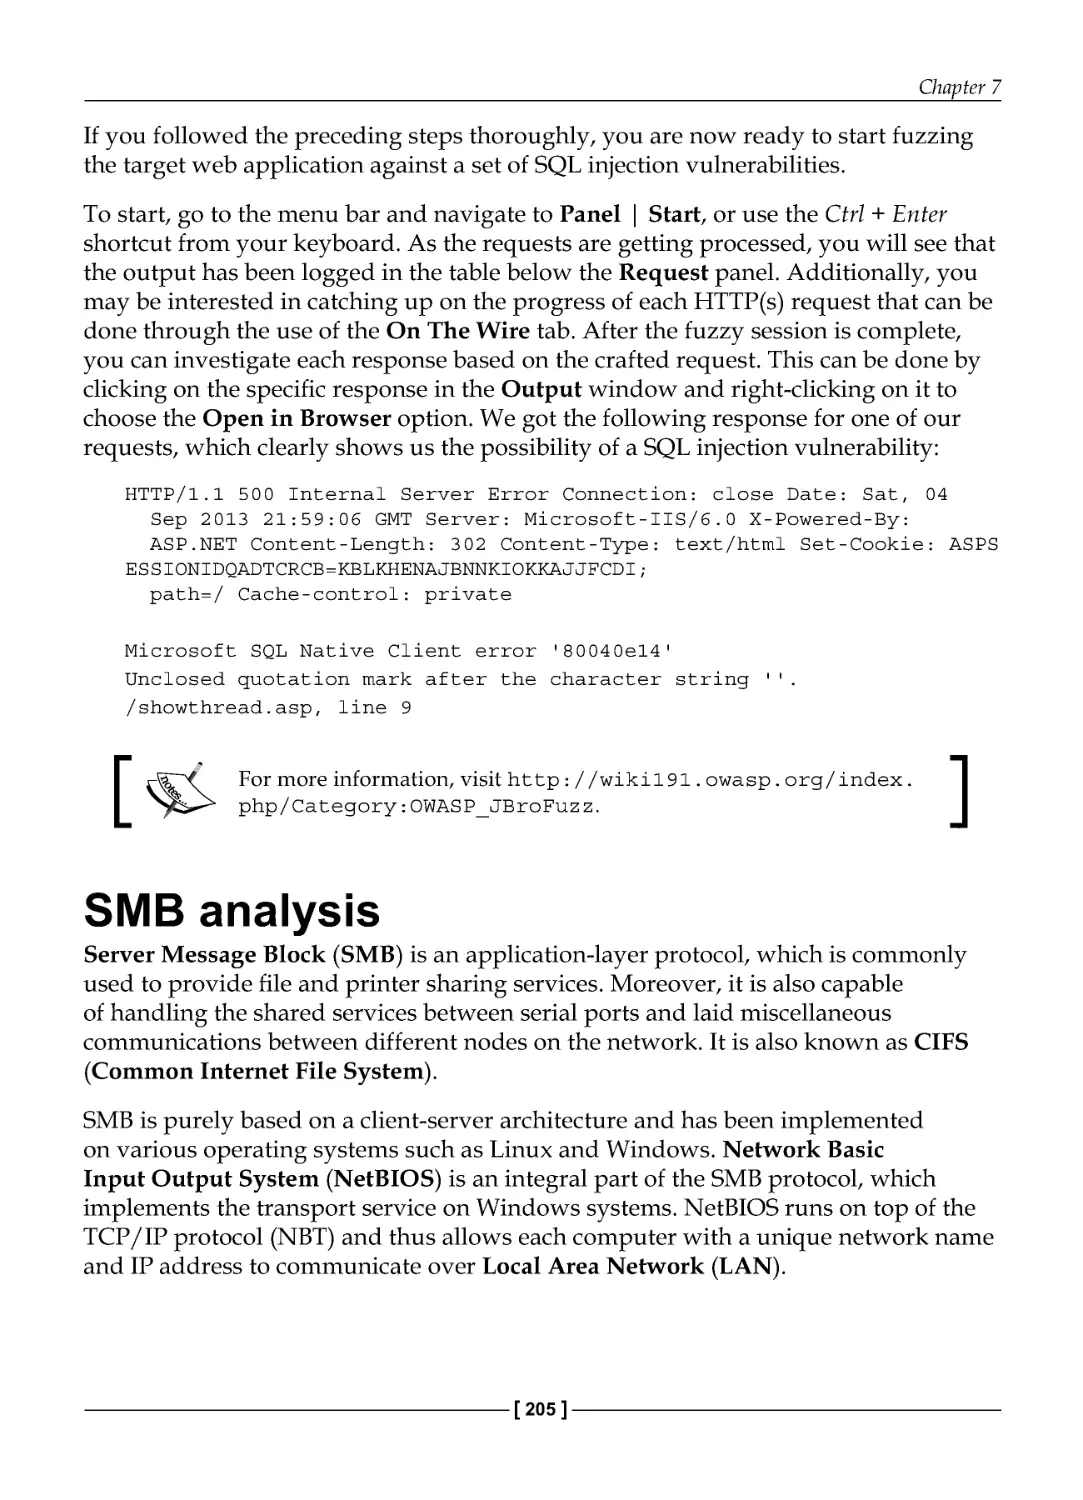 SMB analysis